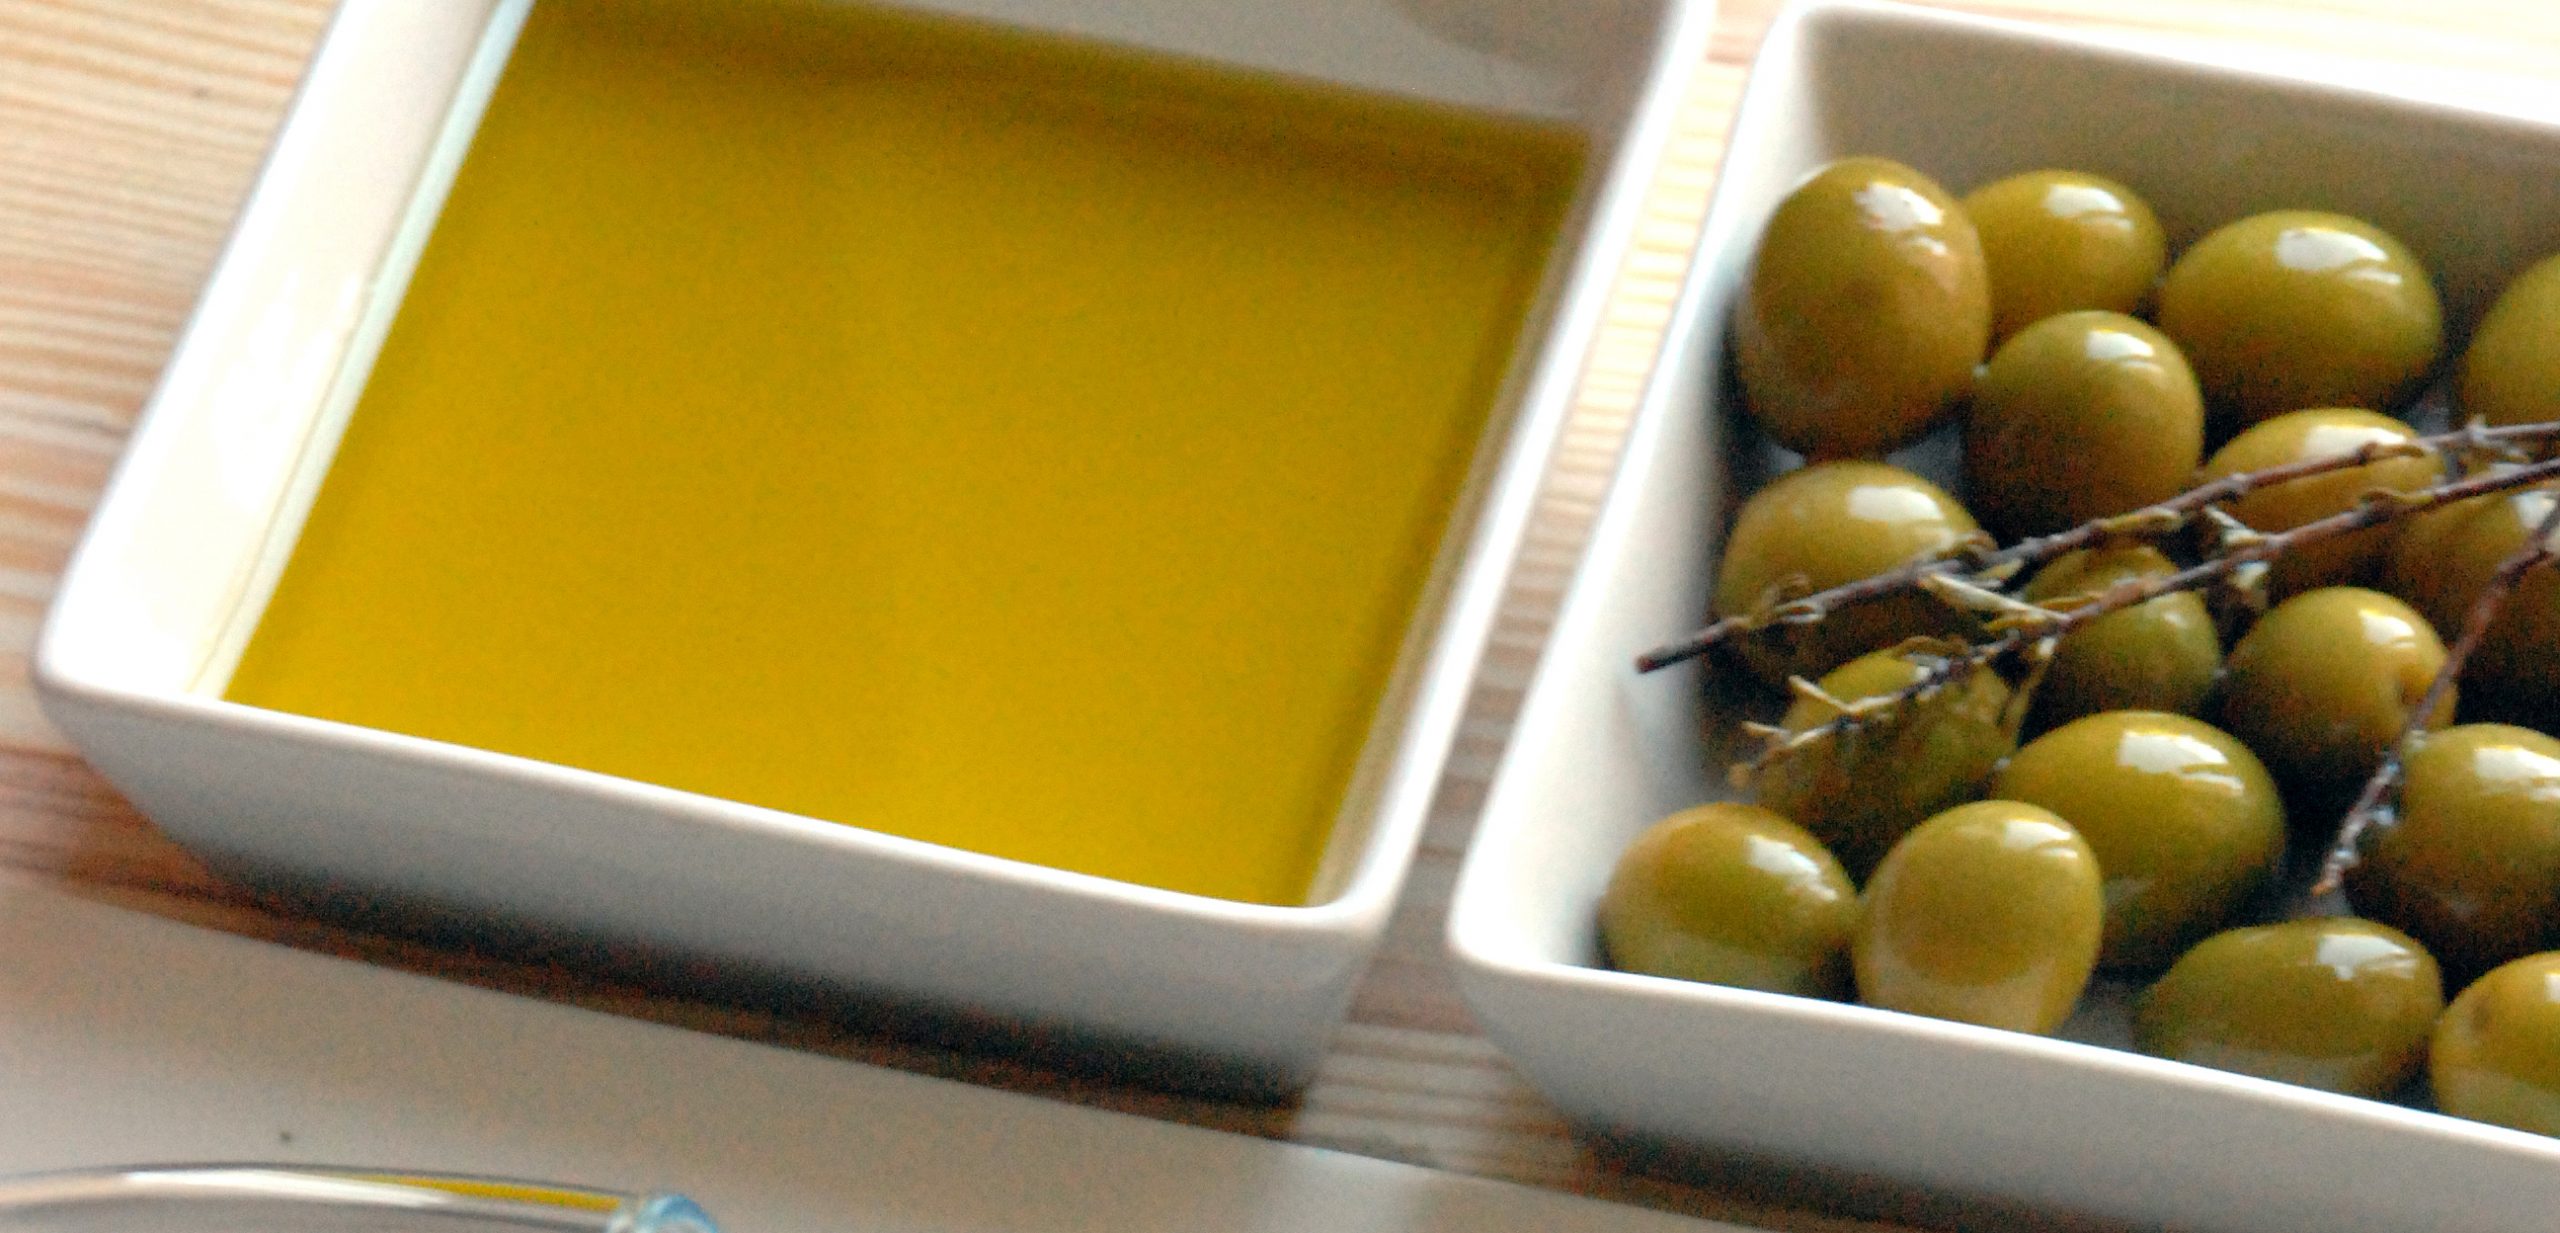 Olive oil: the Spanish “liquid gold”